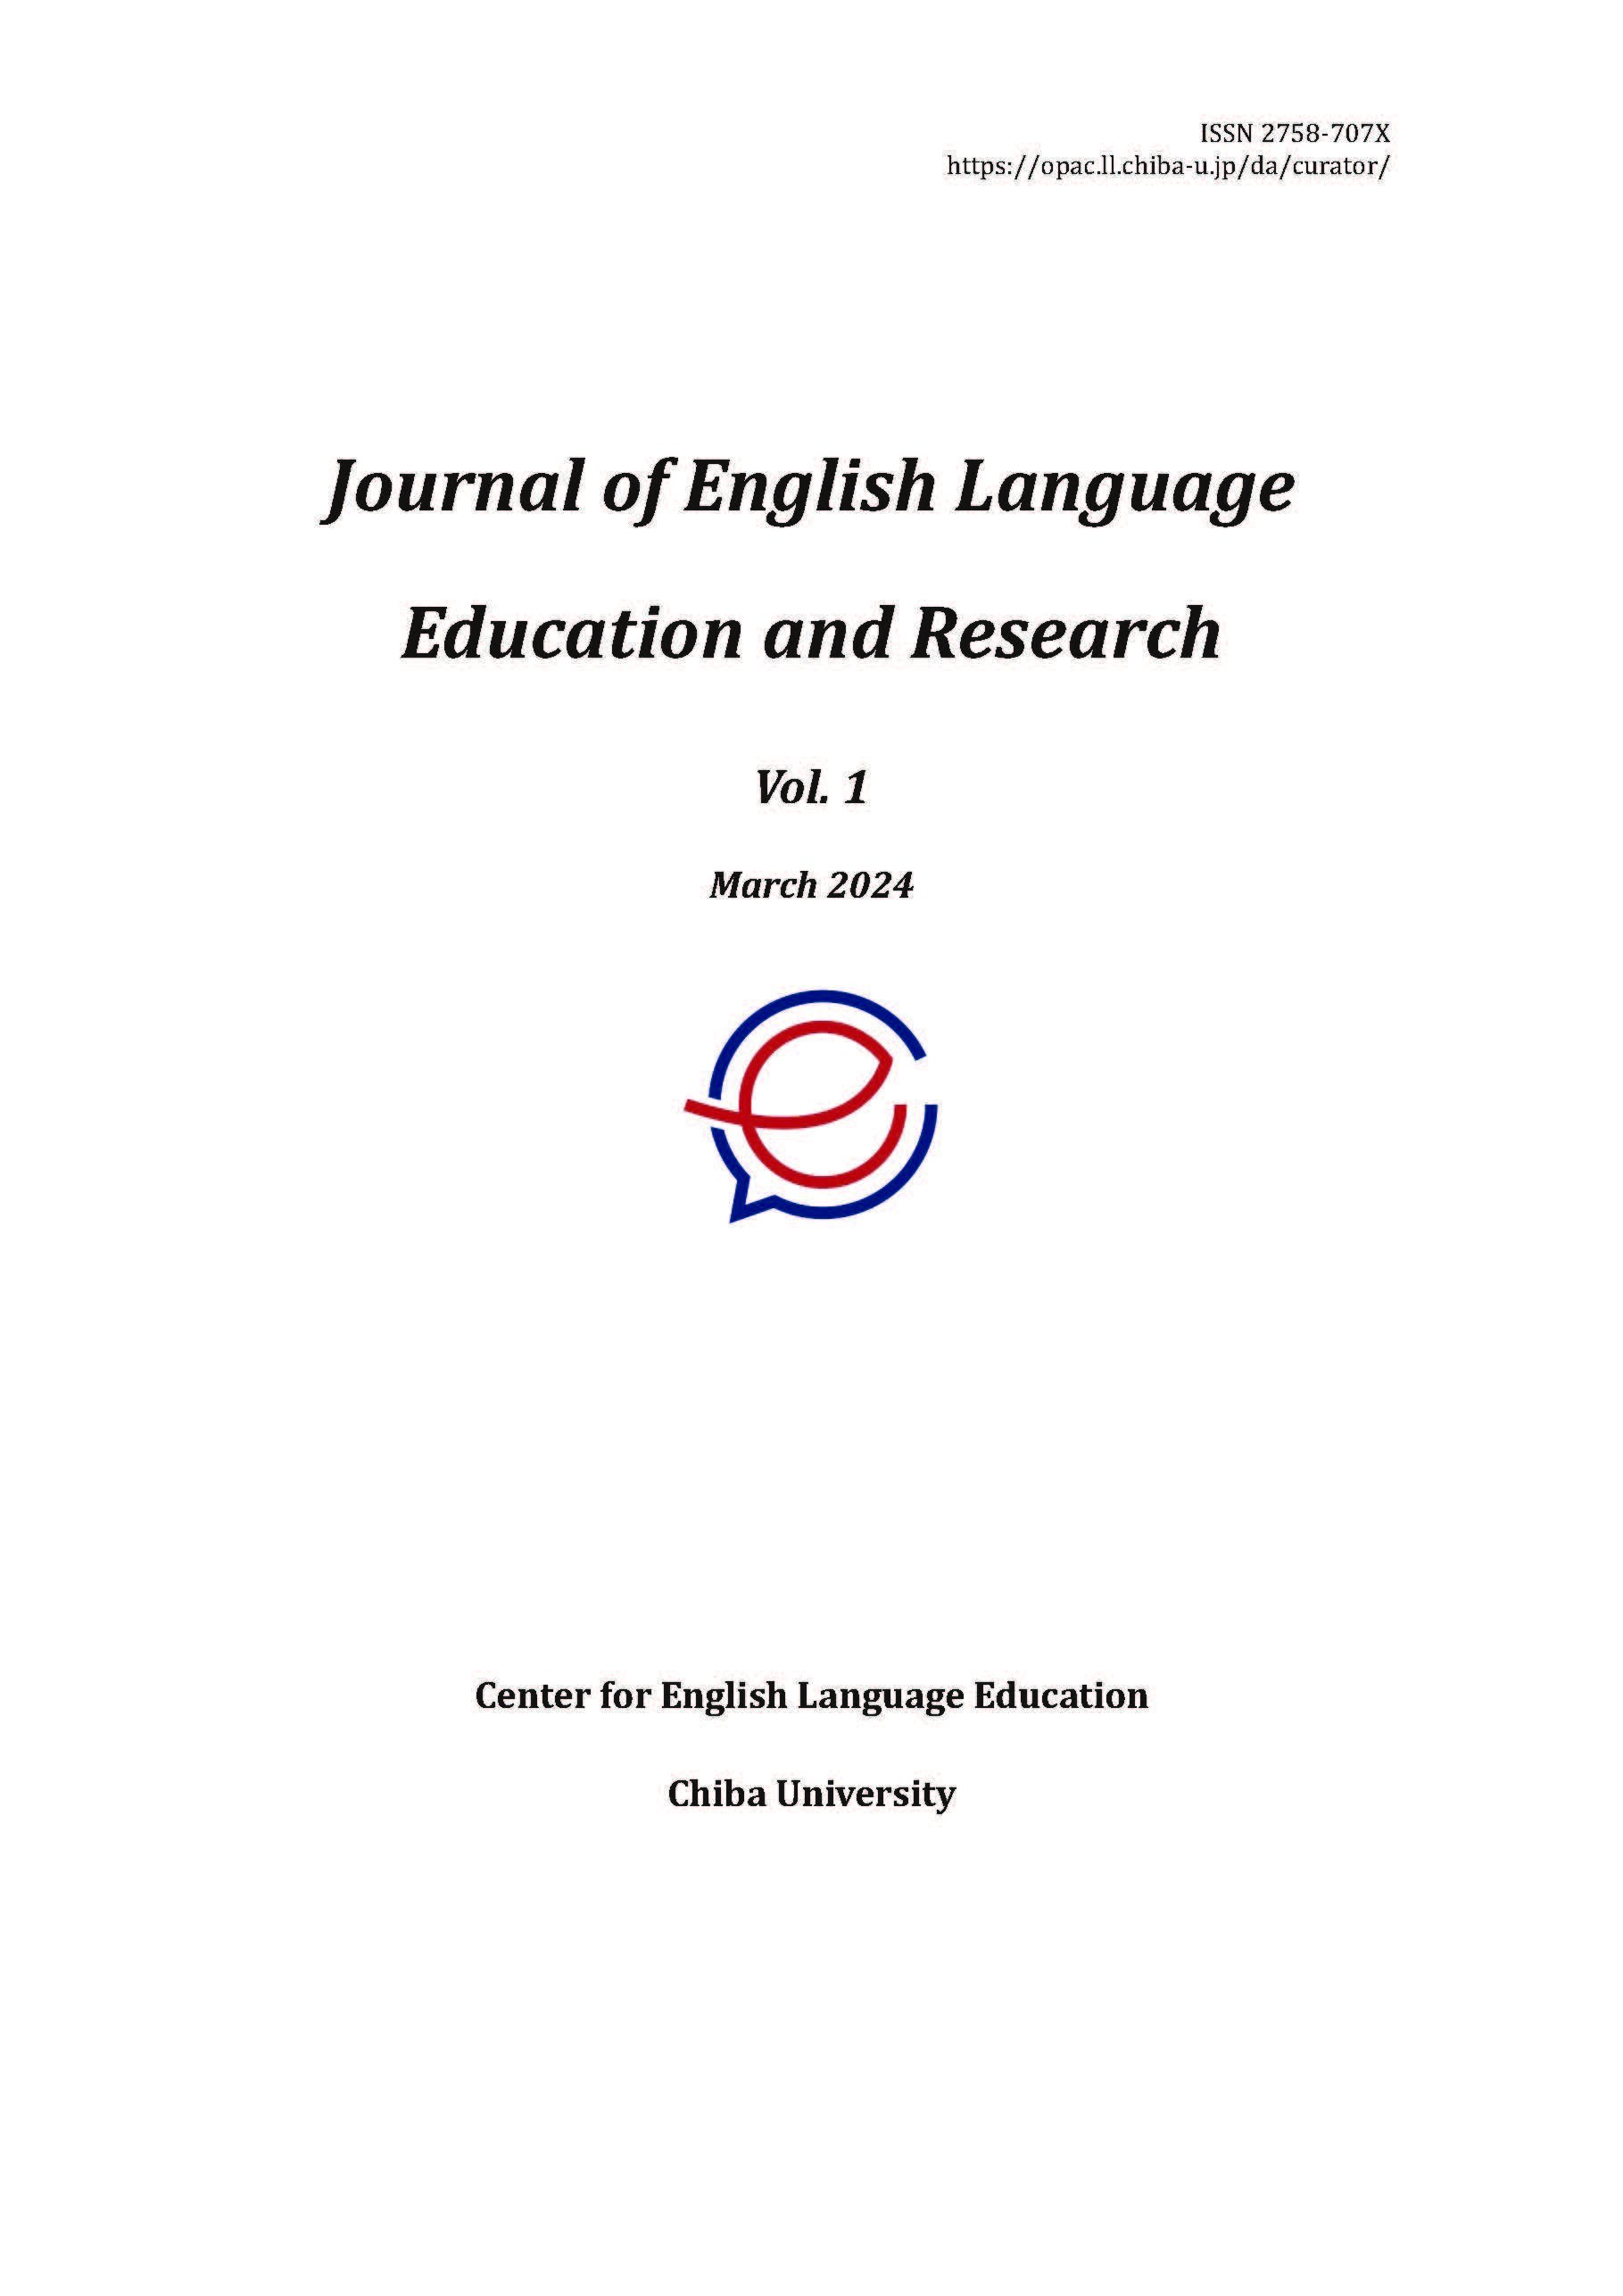 Center for English Language Education ; Vol1